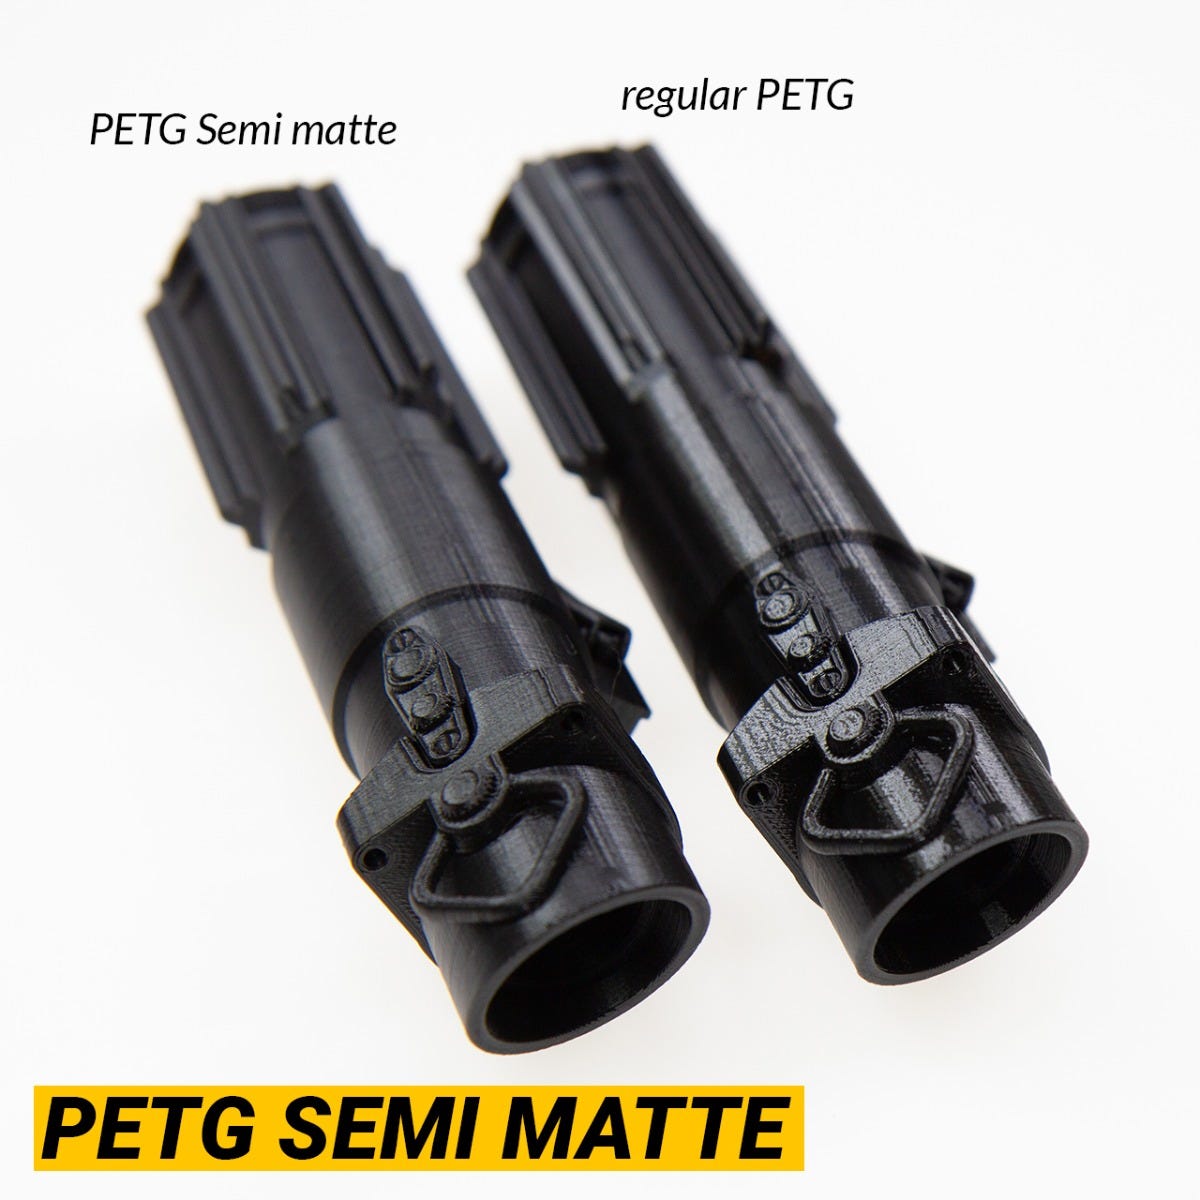 Colorfabb PETG Semi Matte Filament 1.75mm 750g